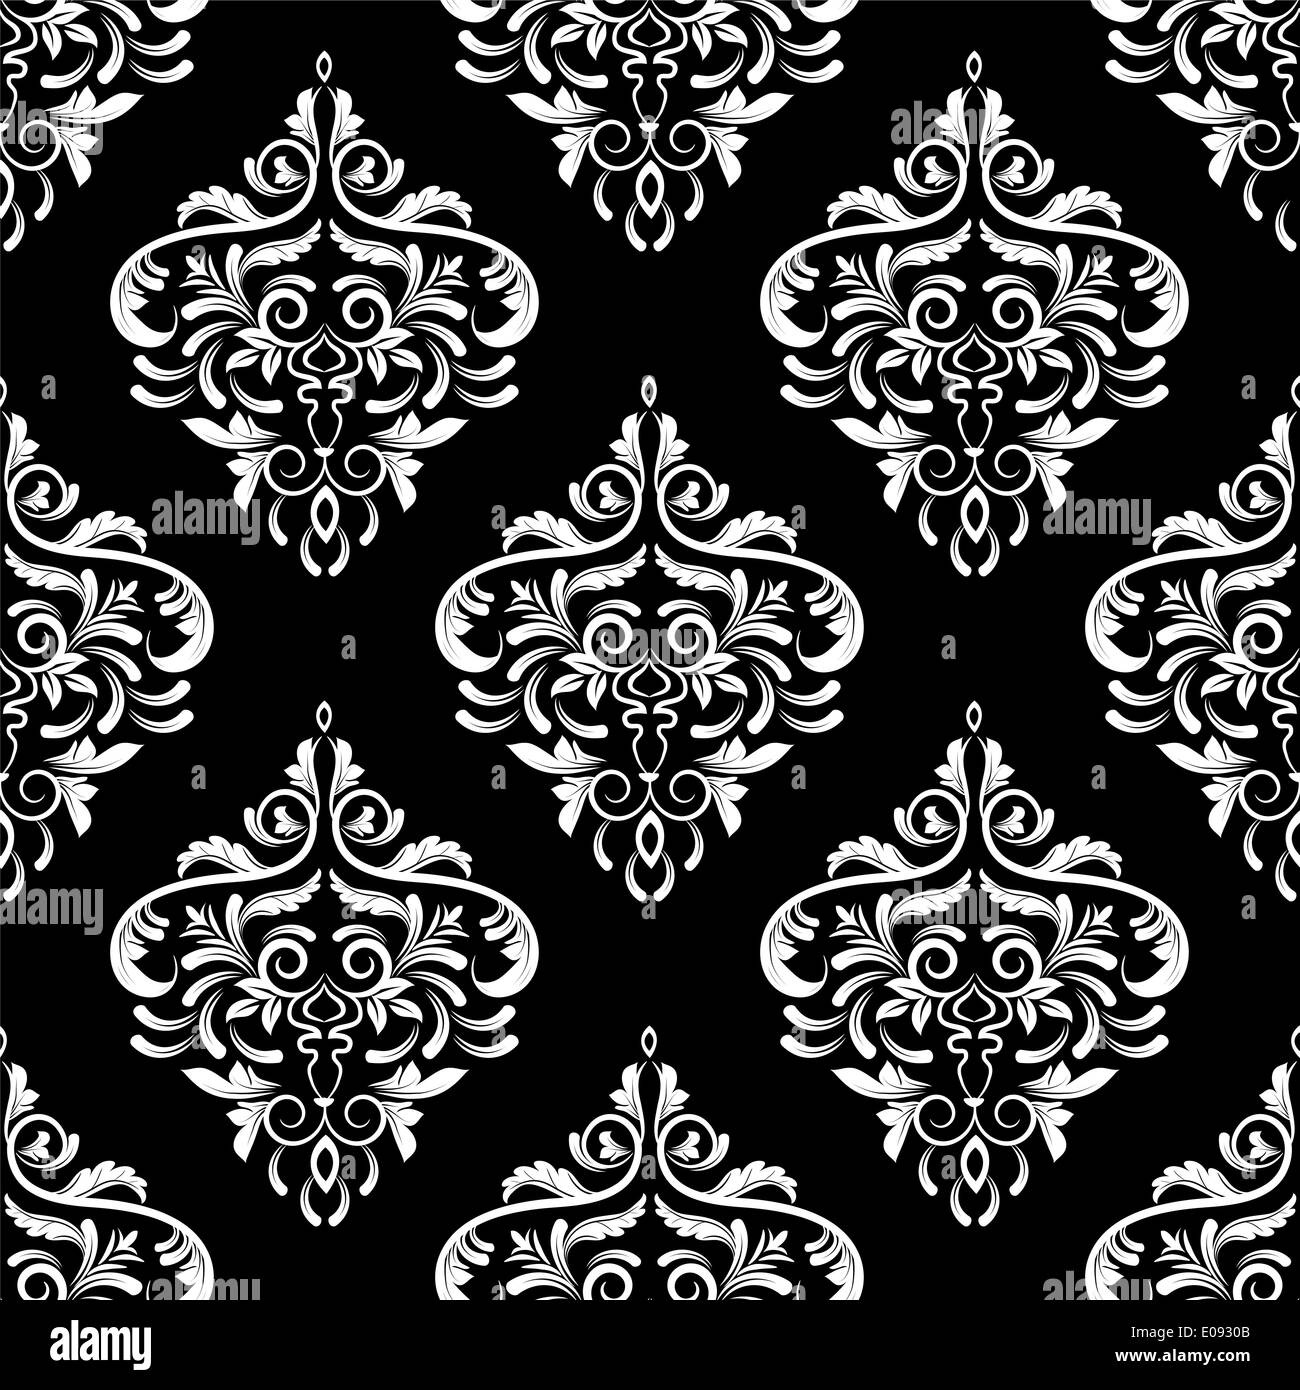 Seamless black and white damask wallpaper stock photo